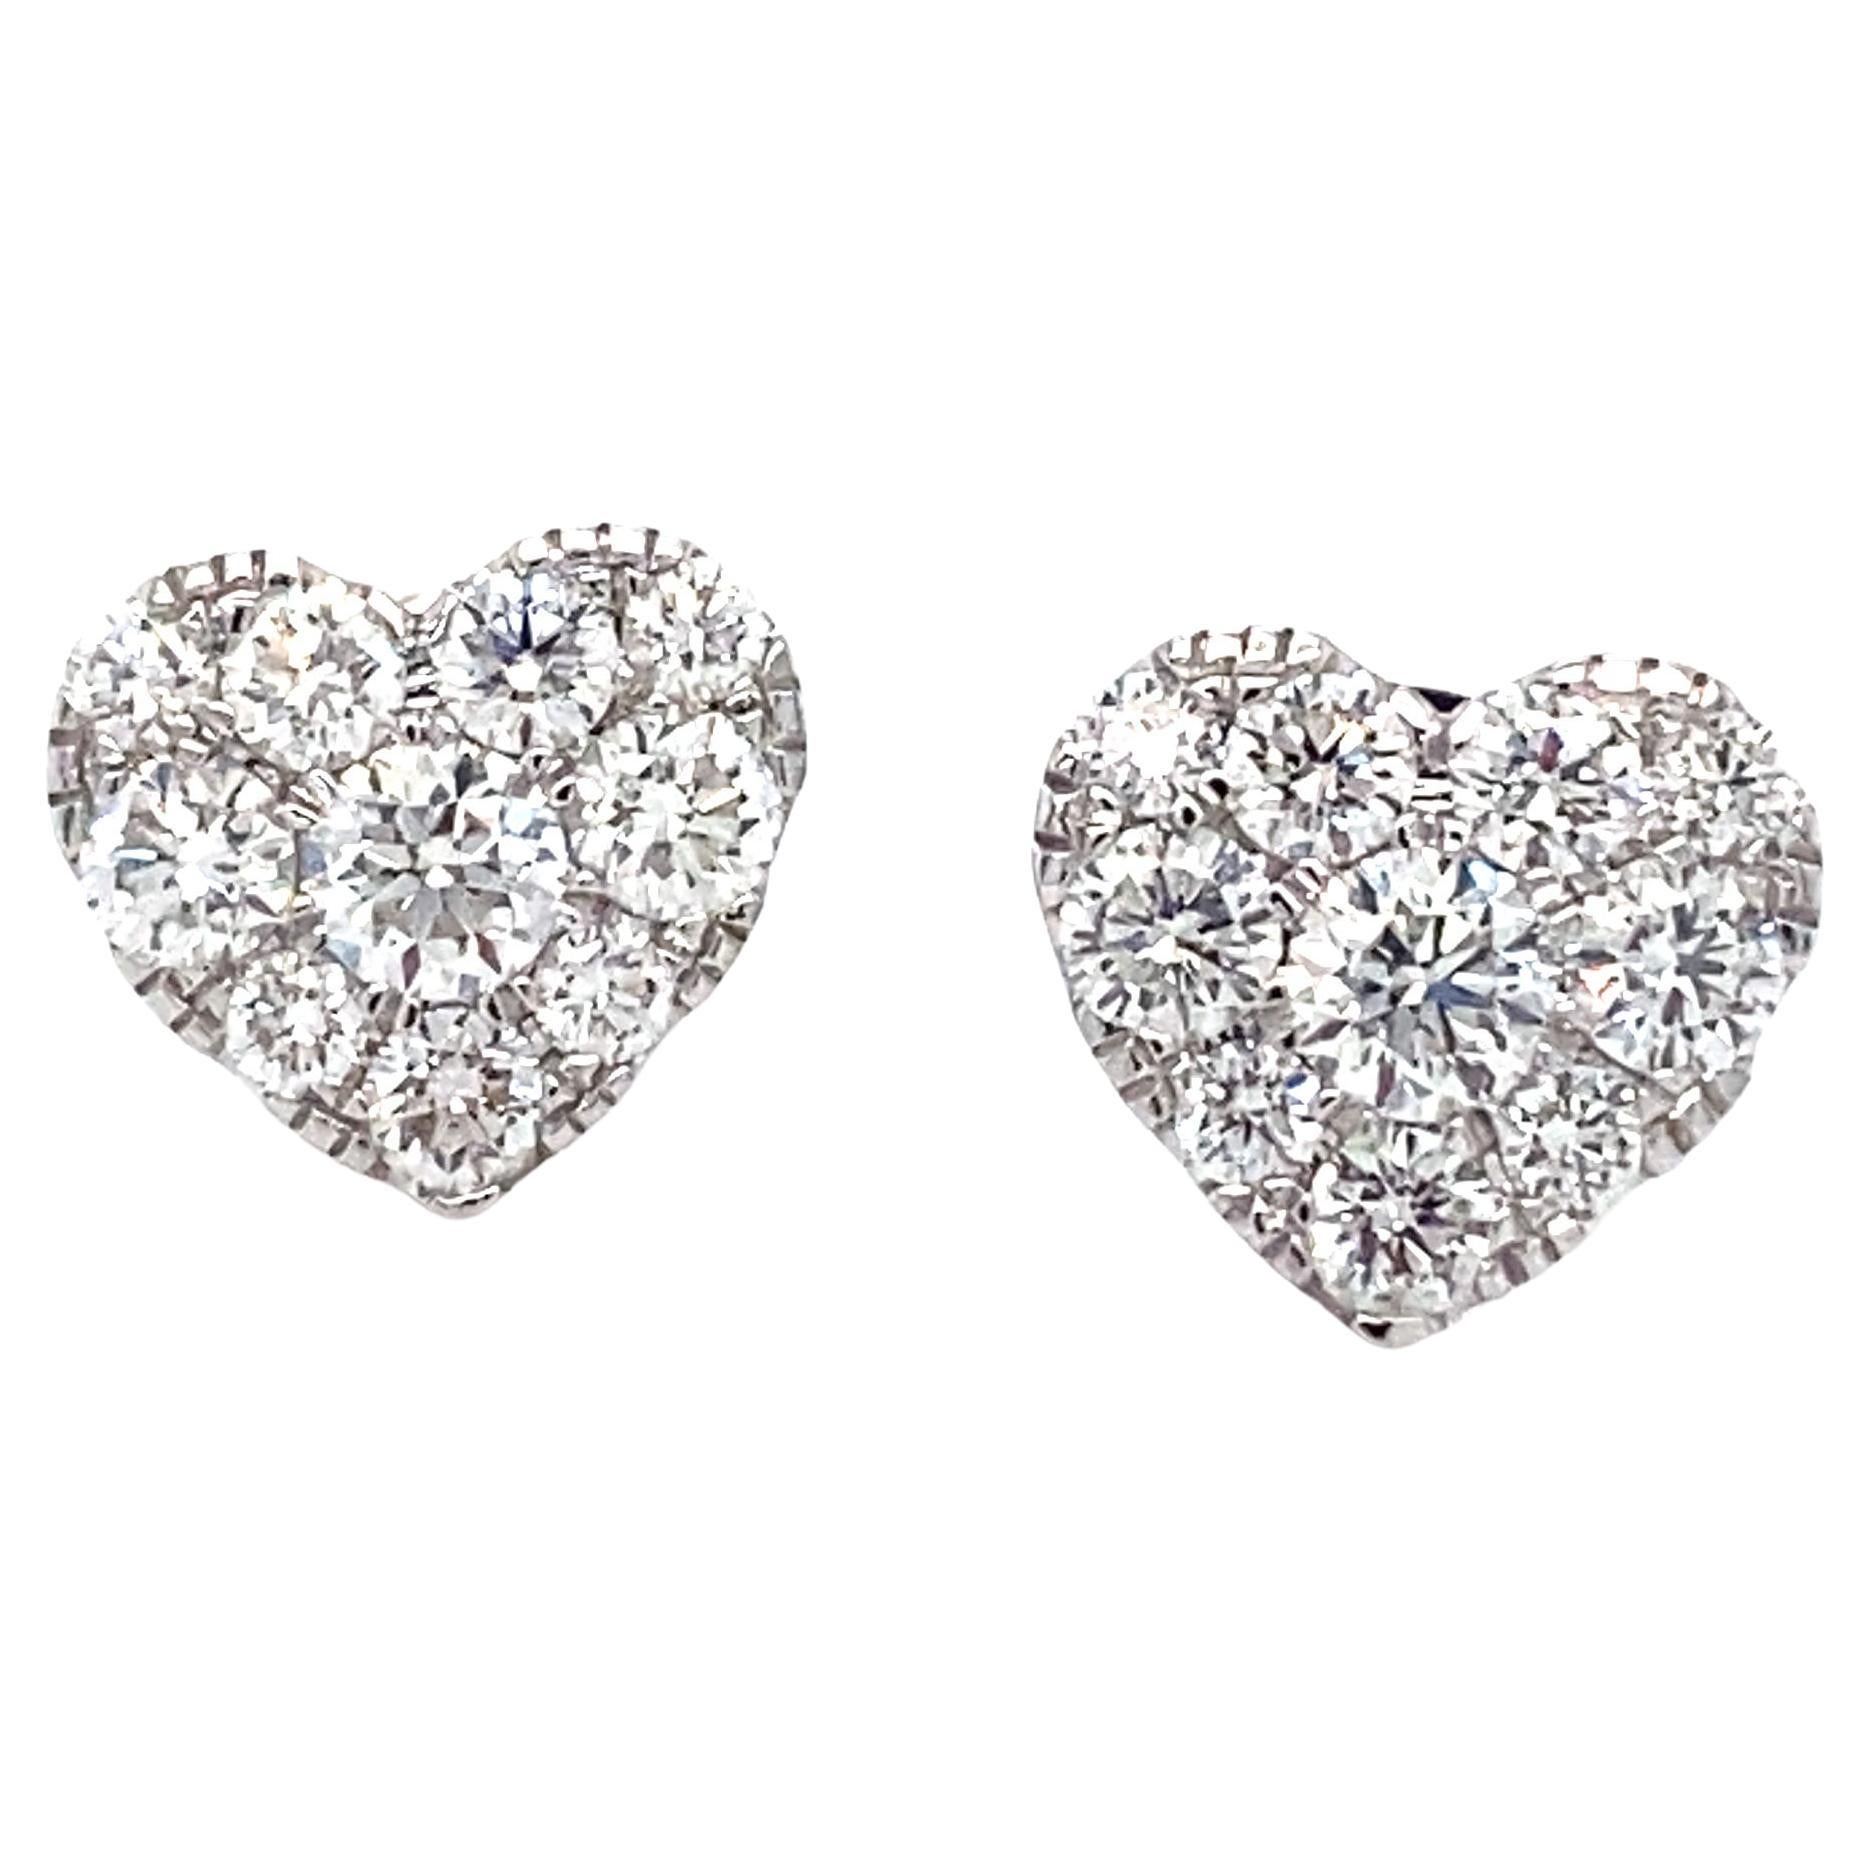 1.20 Carat Total Diamond Heart Earrings in 14 Karat White Gold